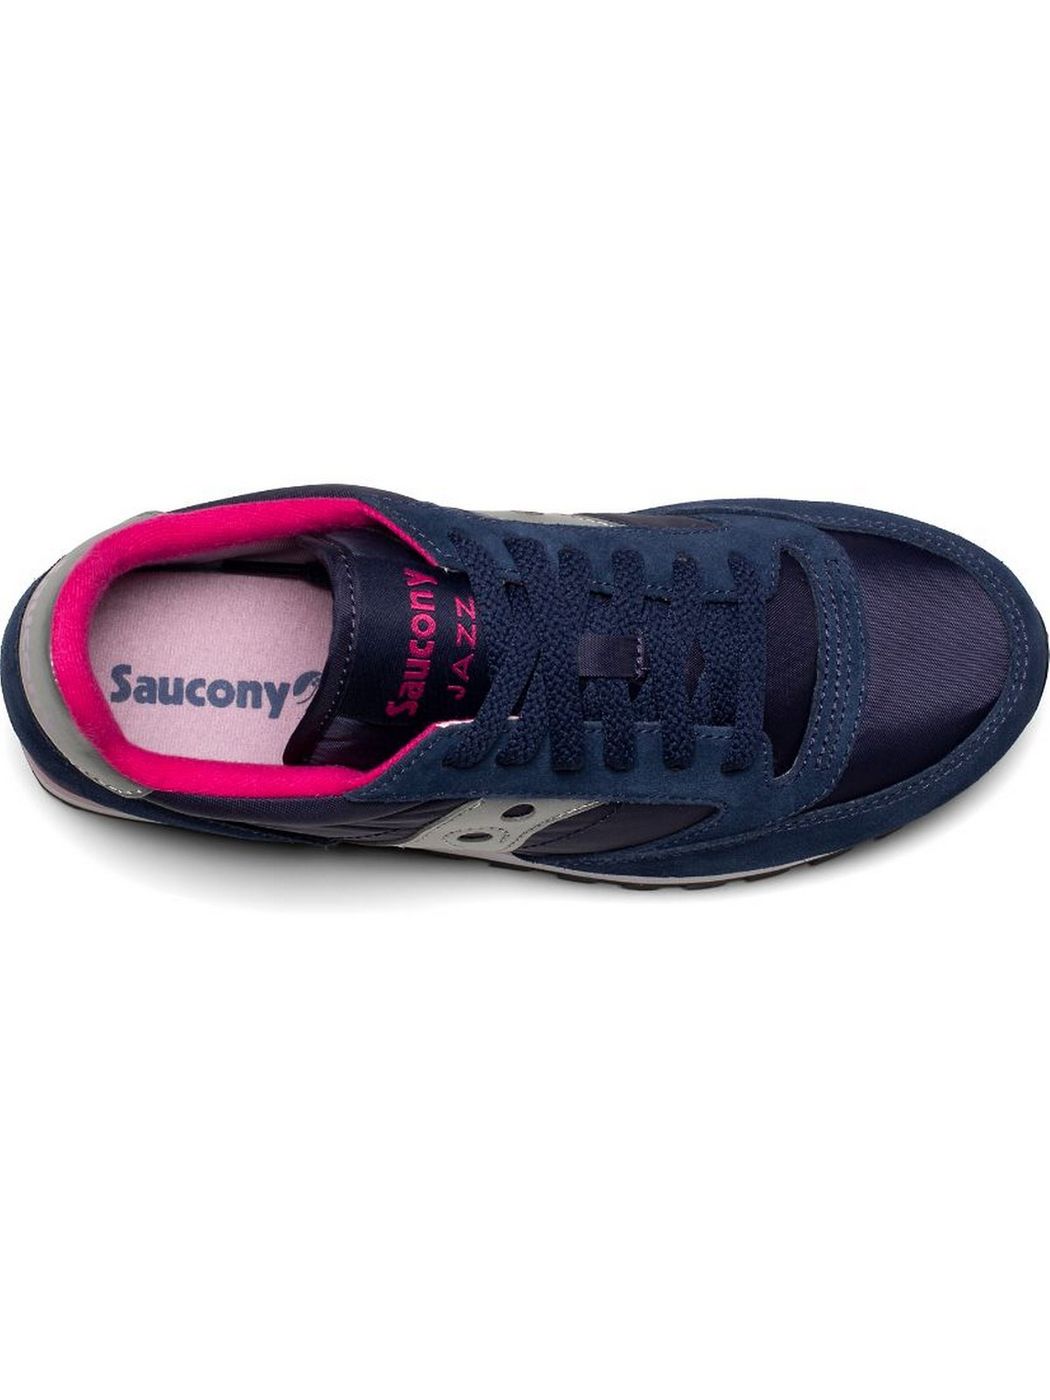 SAUCONY Sneaker Donna Jazz original S1044-630 Blu